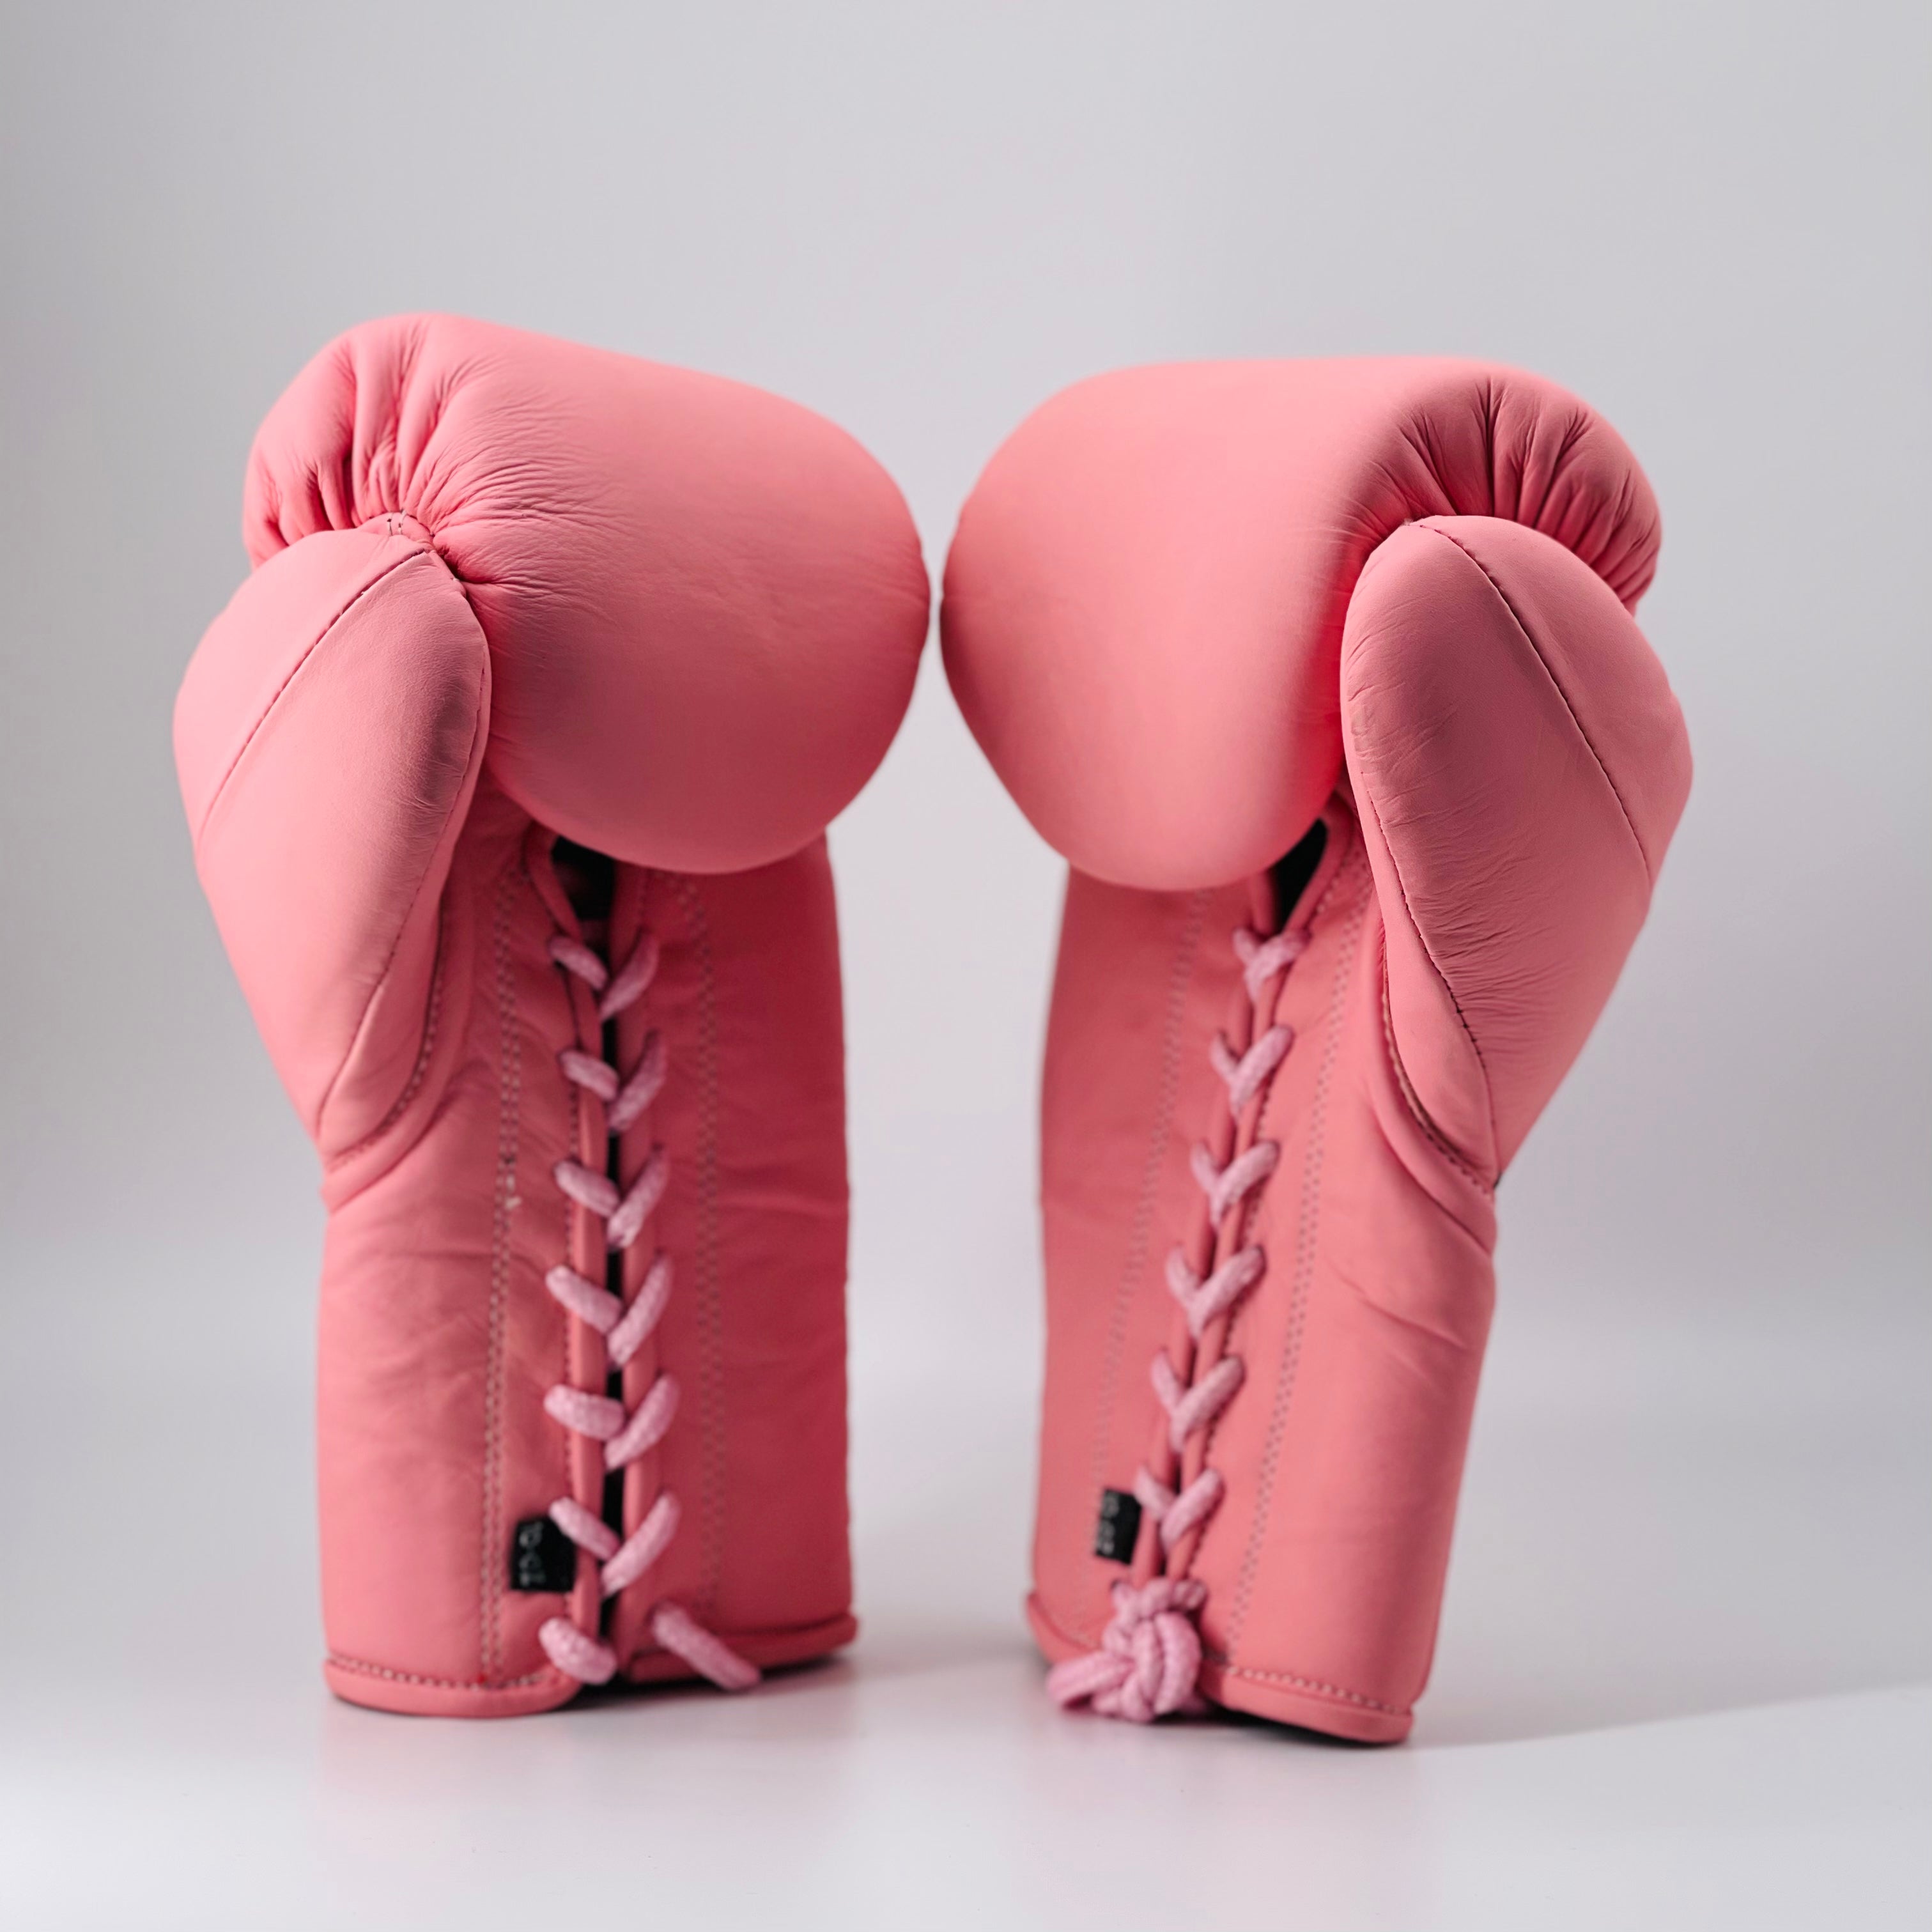 Pro Style Fight Gloves ( Pink Matte)